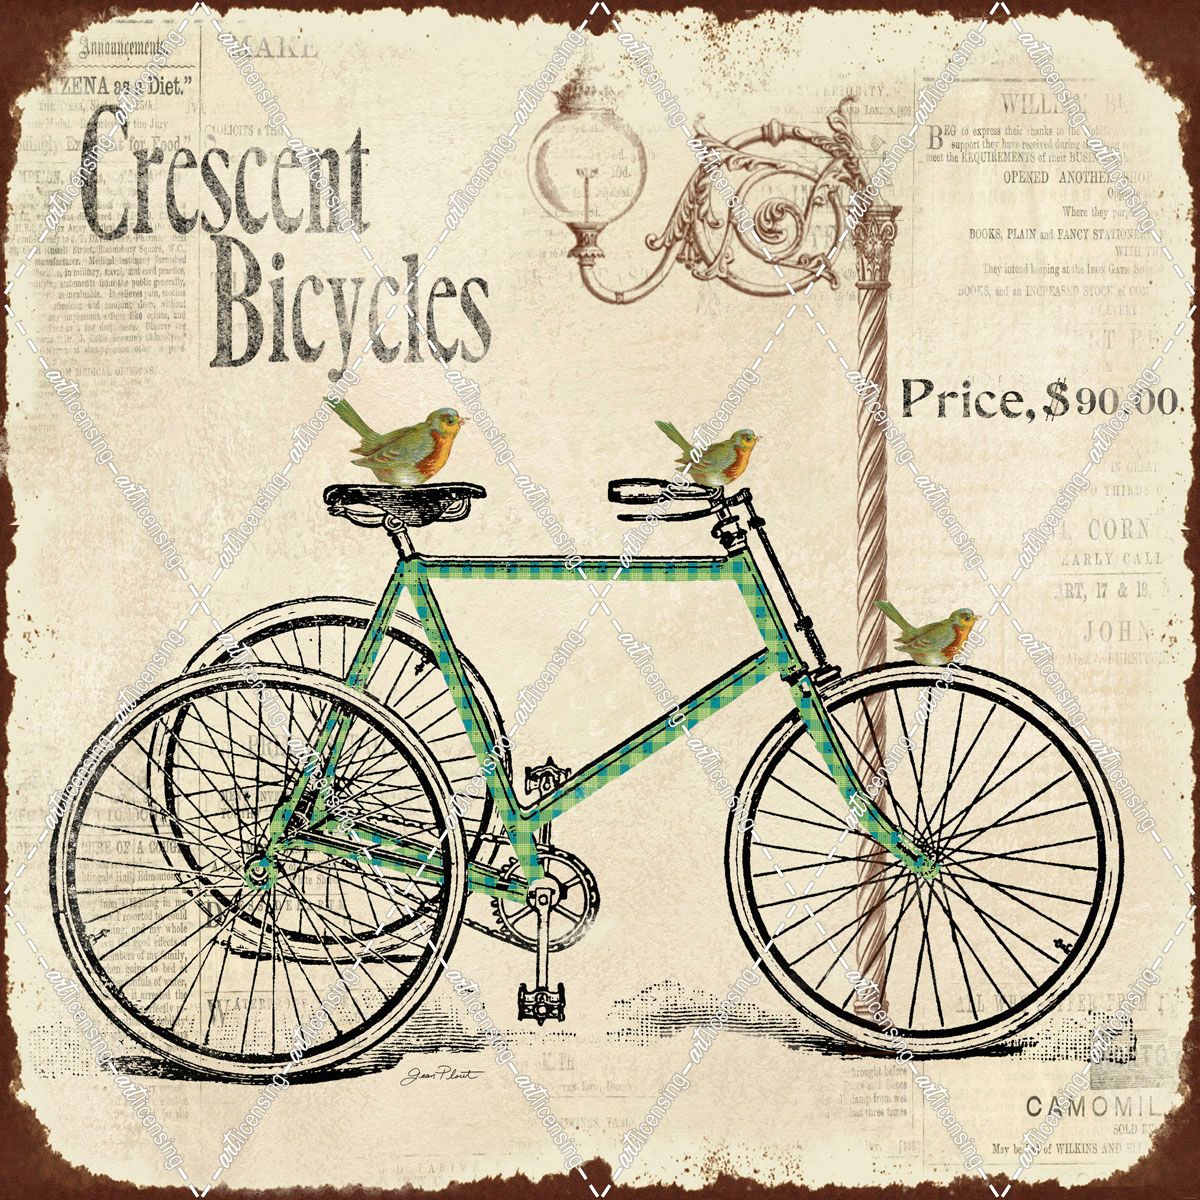 BIKE-CRESENT BICYCLES